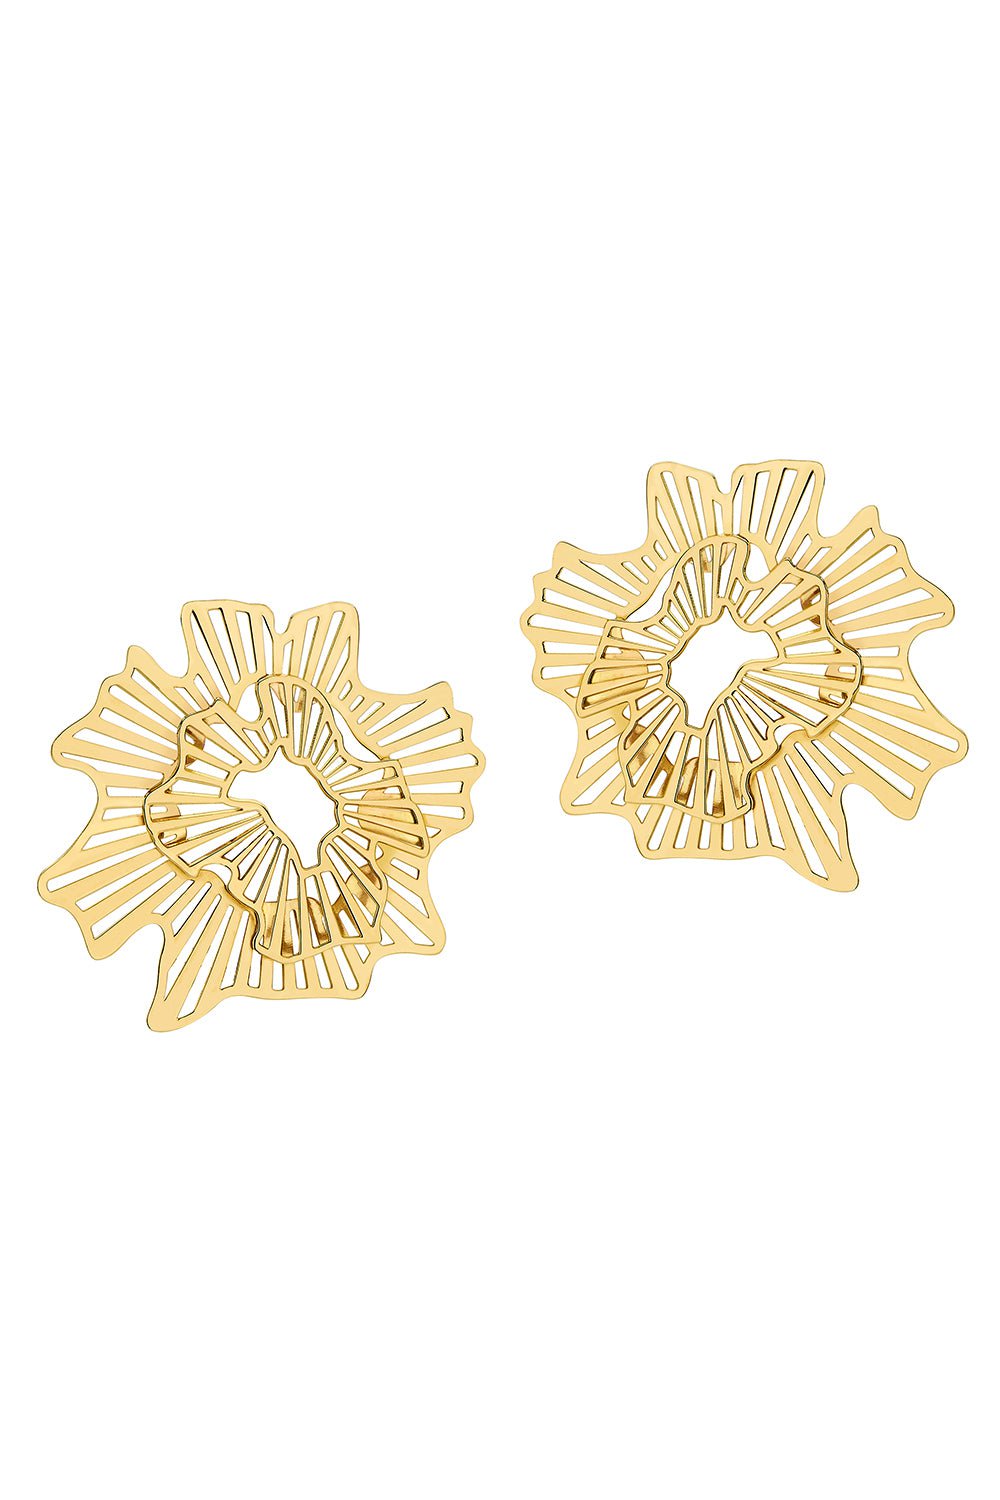 CAROL KAUFFMANN-Spiral Earrings-YELLOW GOLD